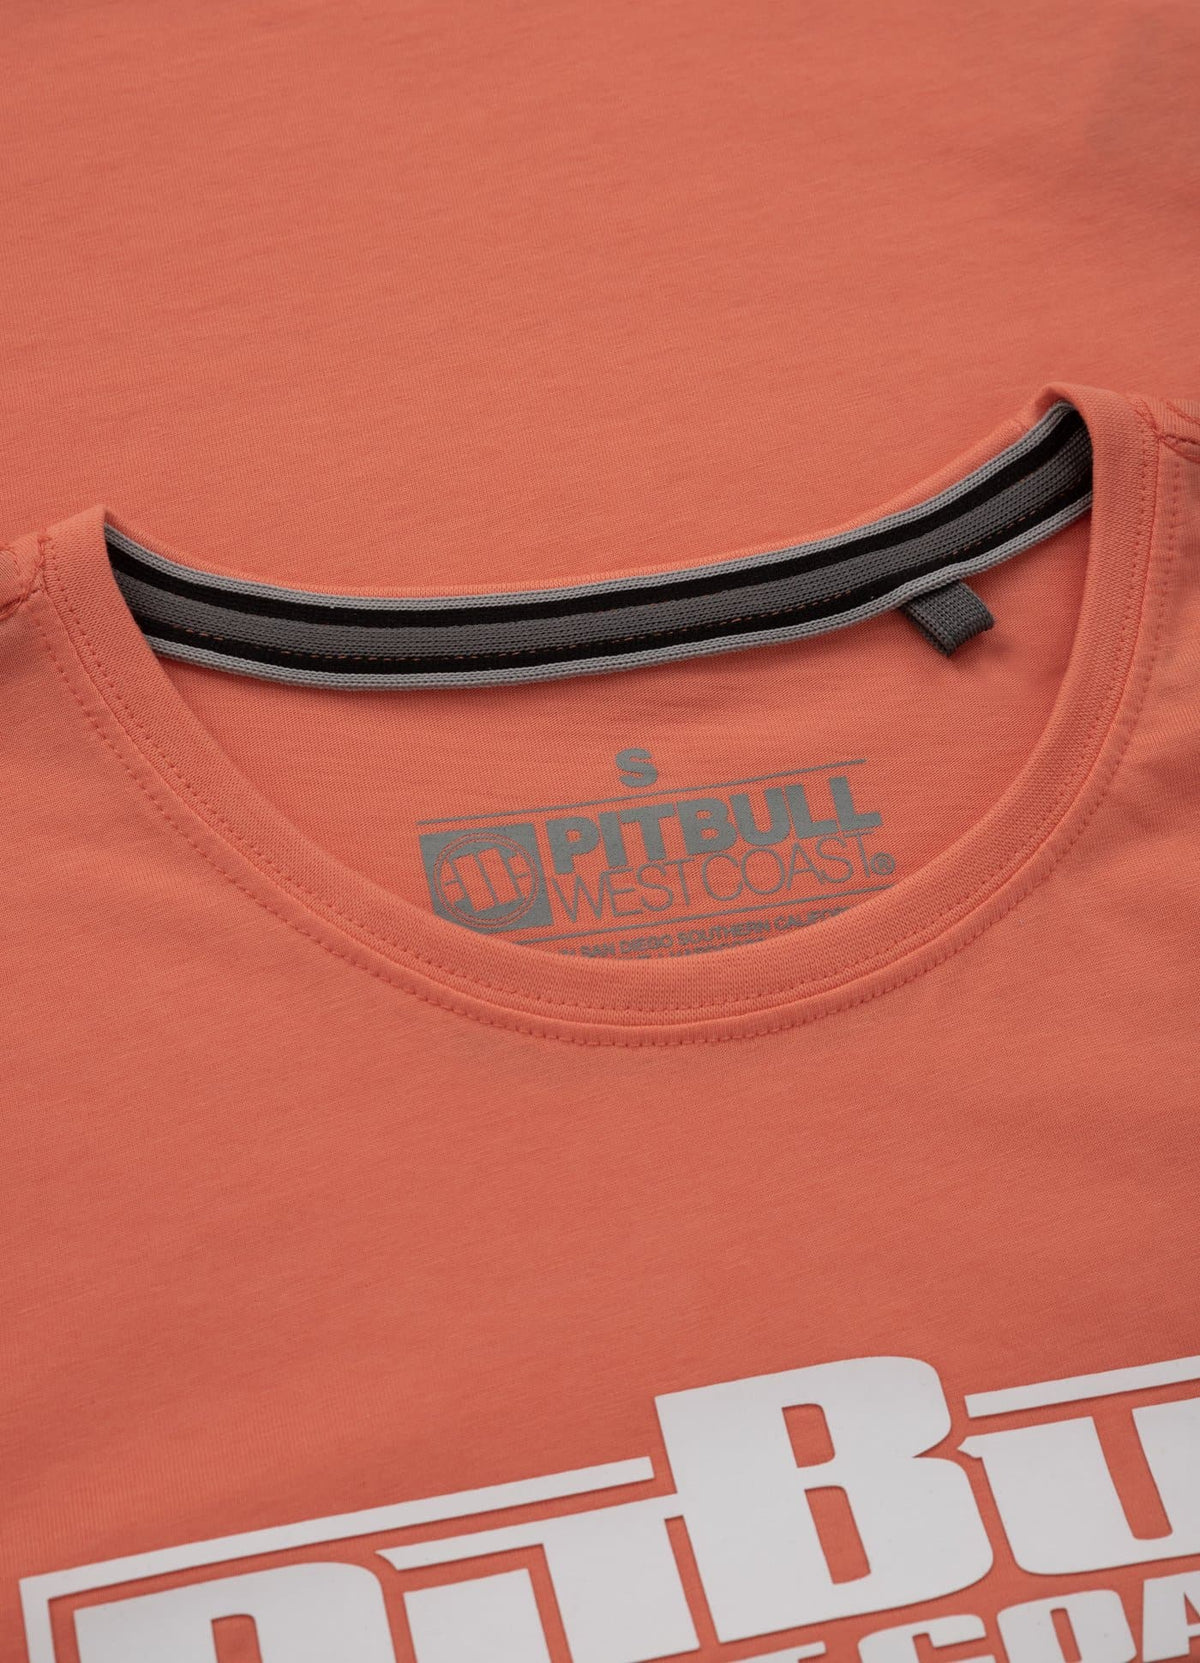 Women's T-shirt BOXING Coral - Pitbull West Coast International Store 